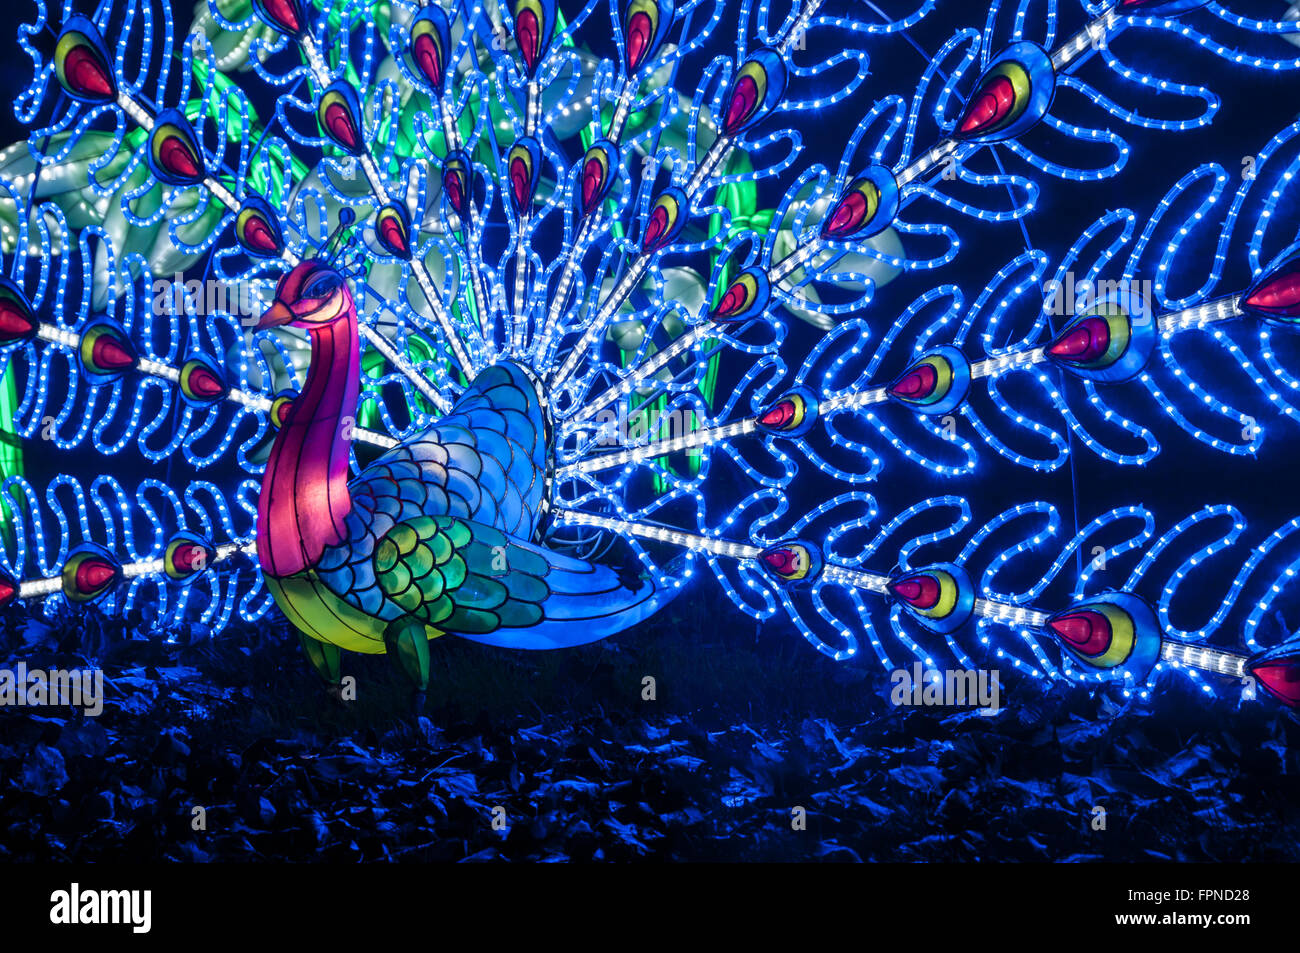 The illuminated peacock lights display christmas xmas seasonal illuminations lighting Kew Gardens, London UK. Stock Photo